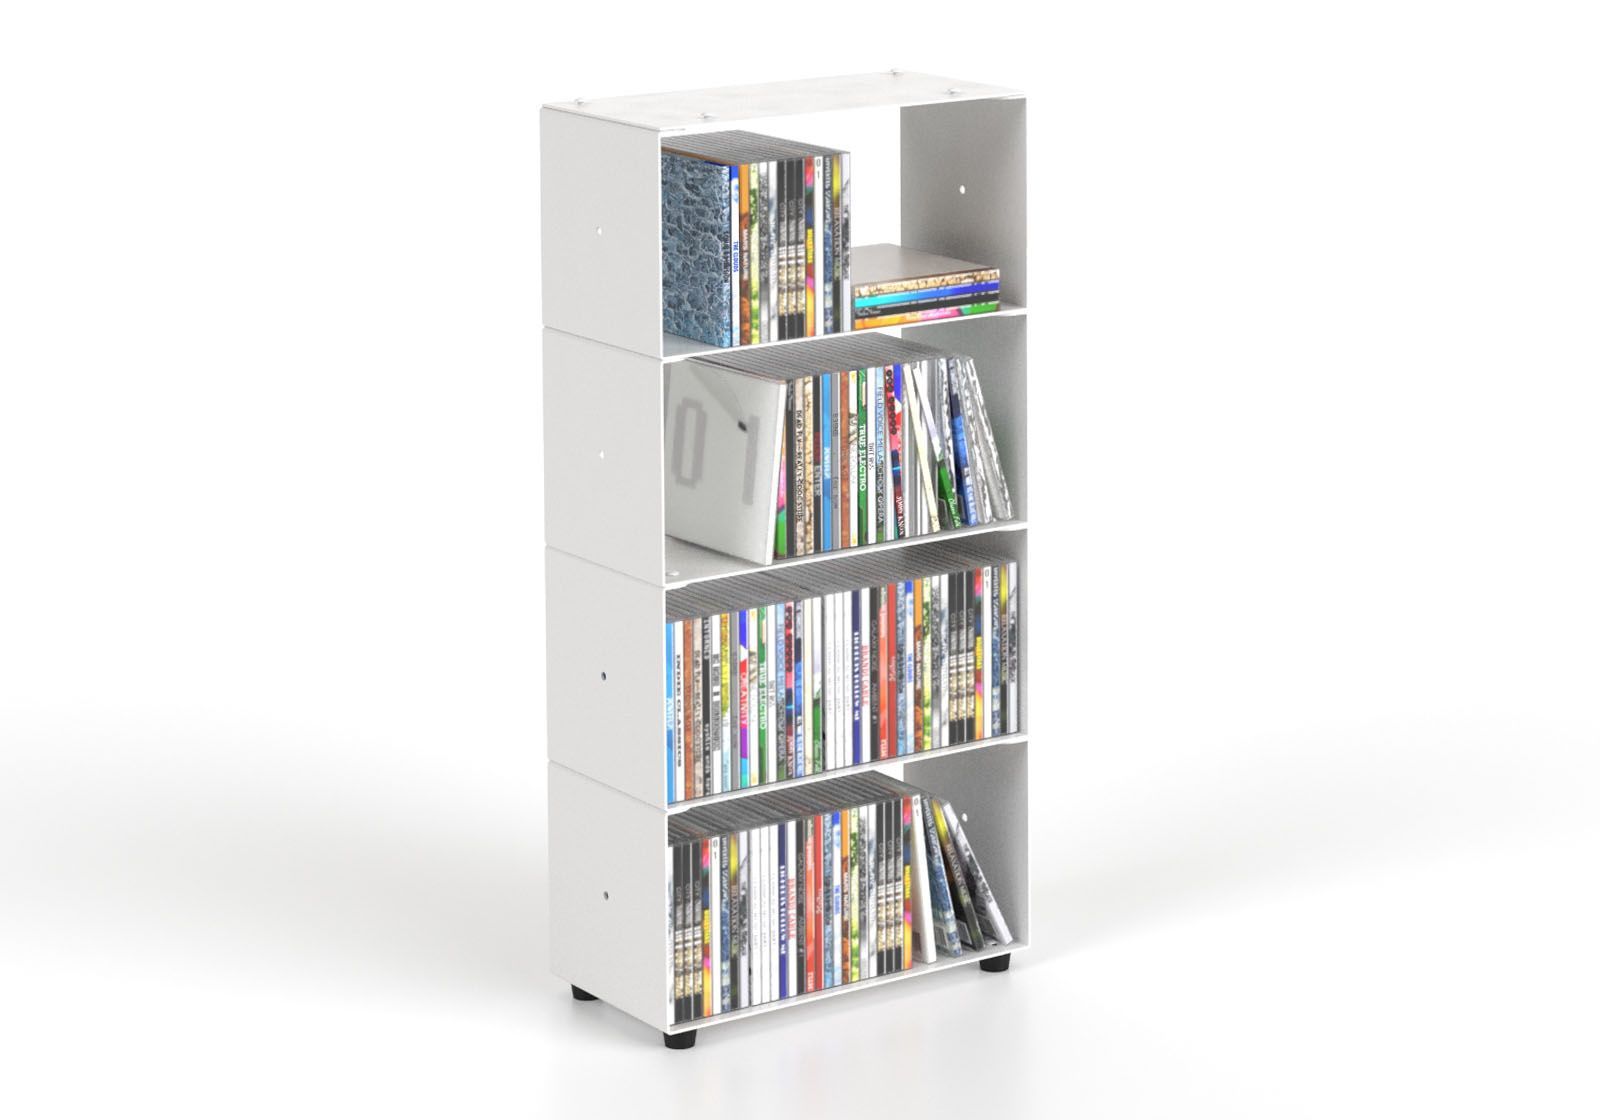 Cd storage W30 H60 D15 cm - 4 shelves